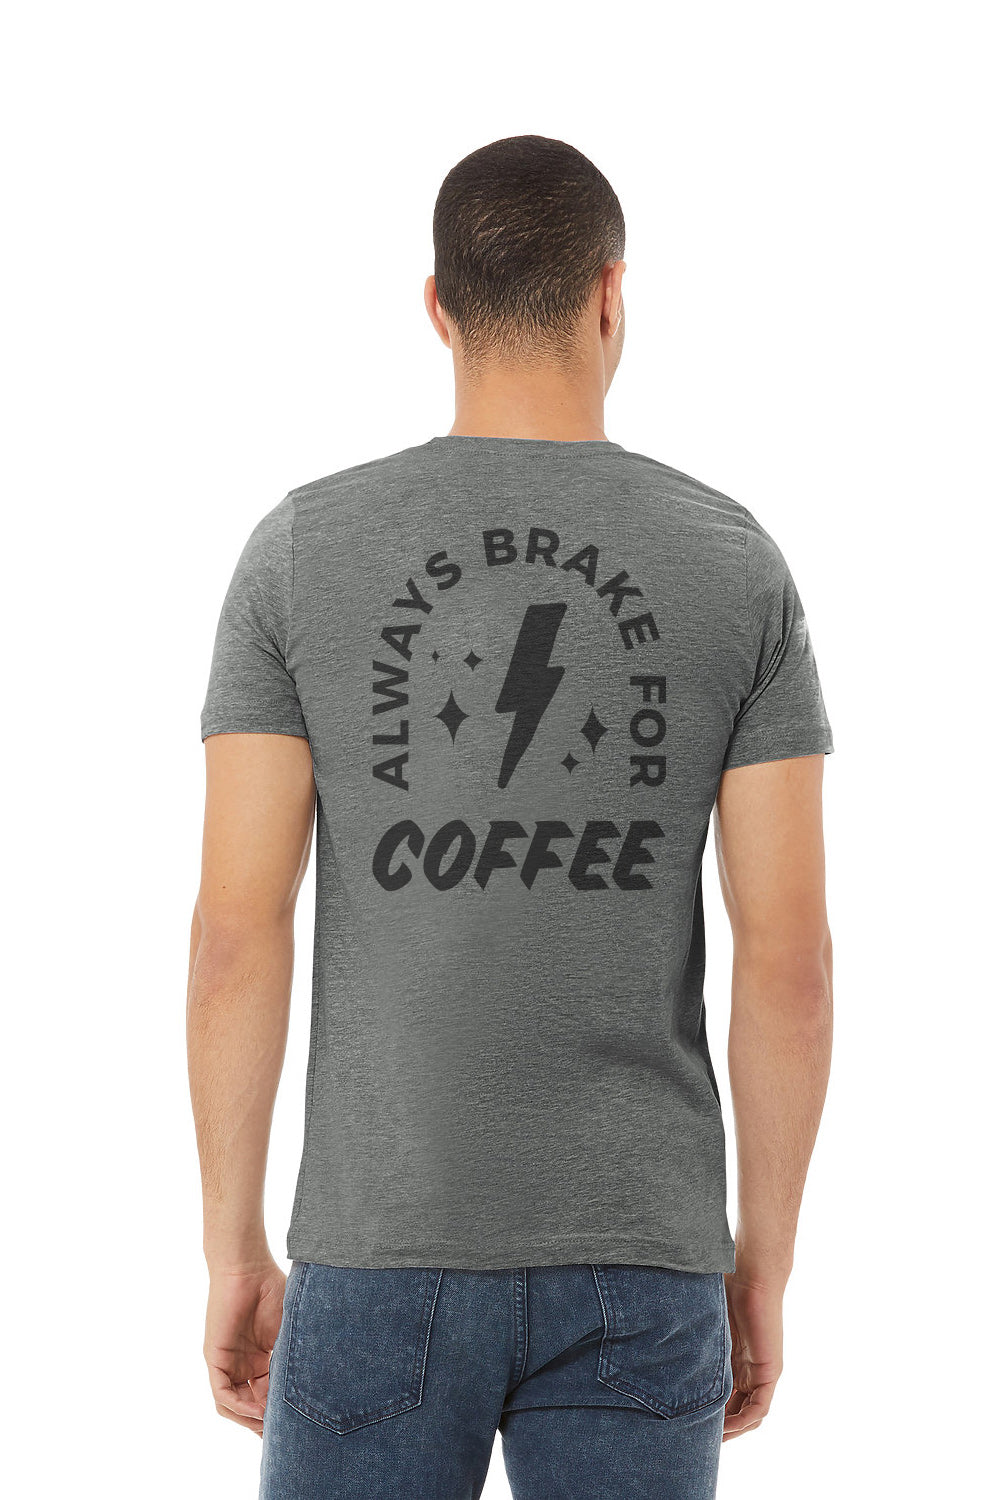 Always Brake for Coffee T-Shirt